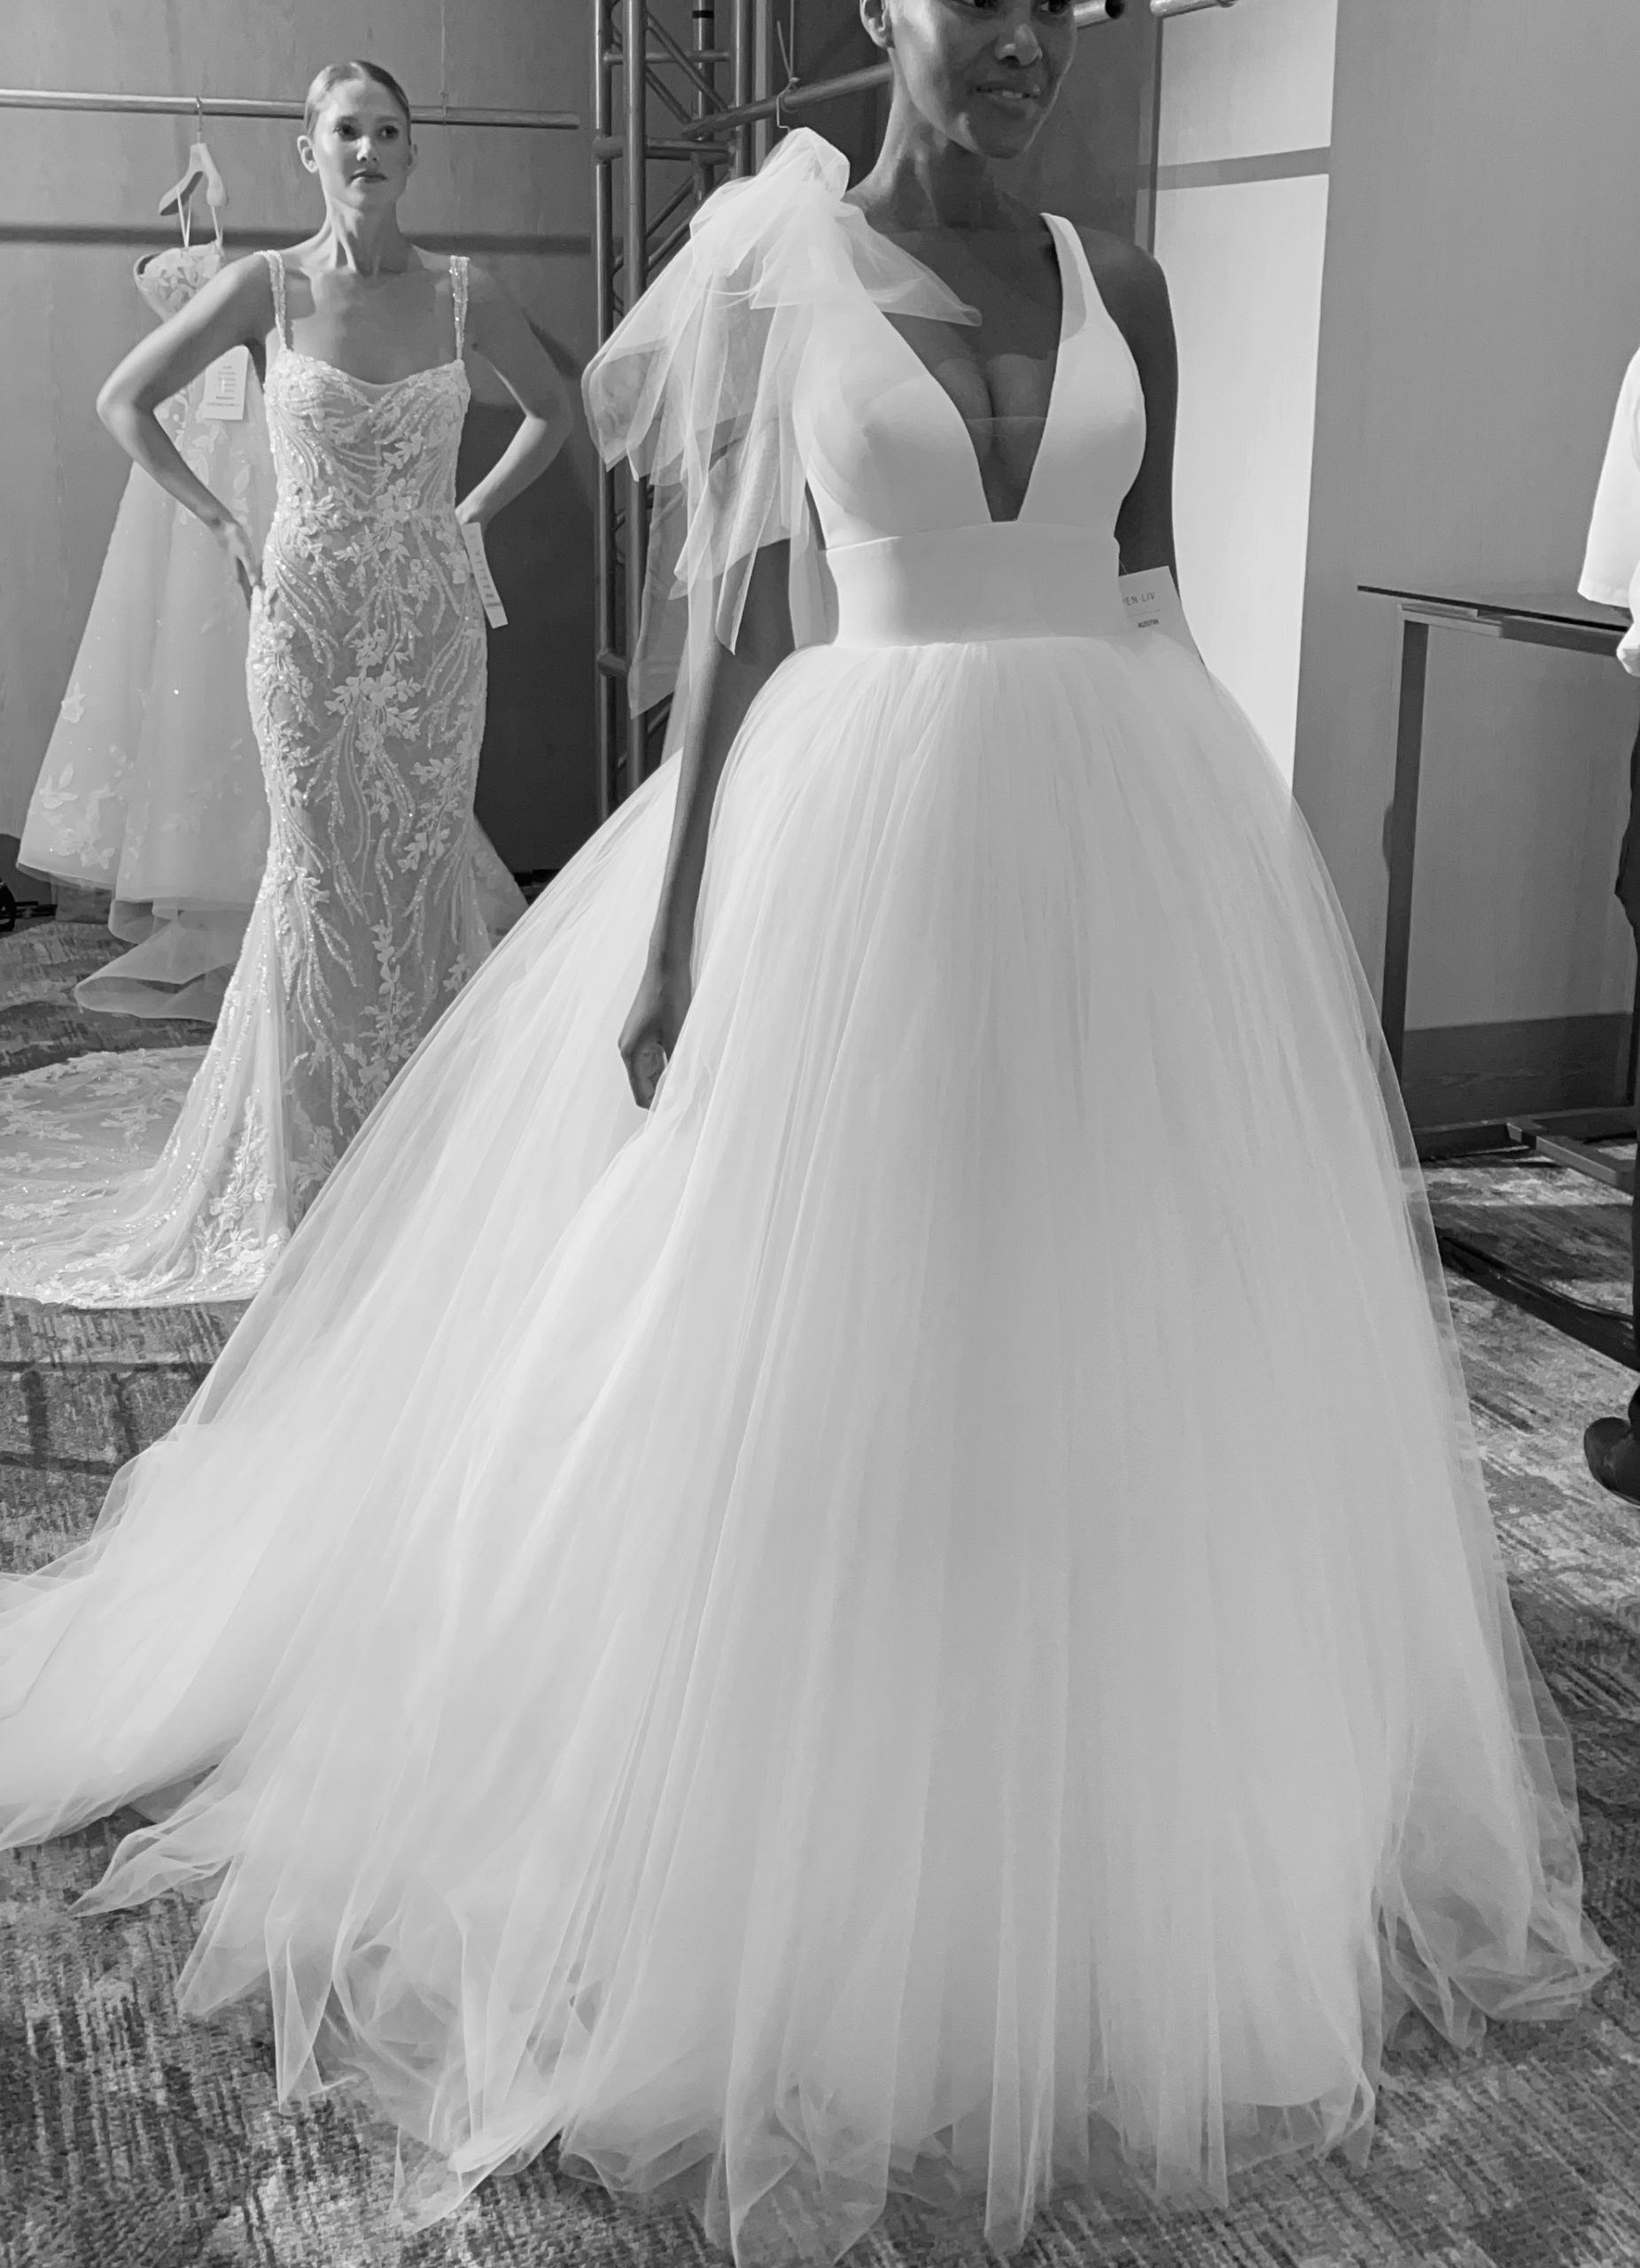 20 Winter Wedding Dress Ideas for Brides